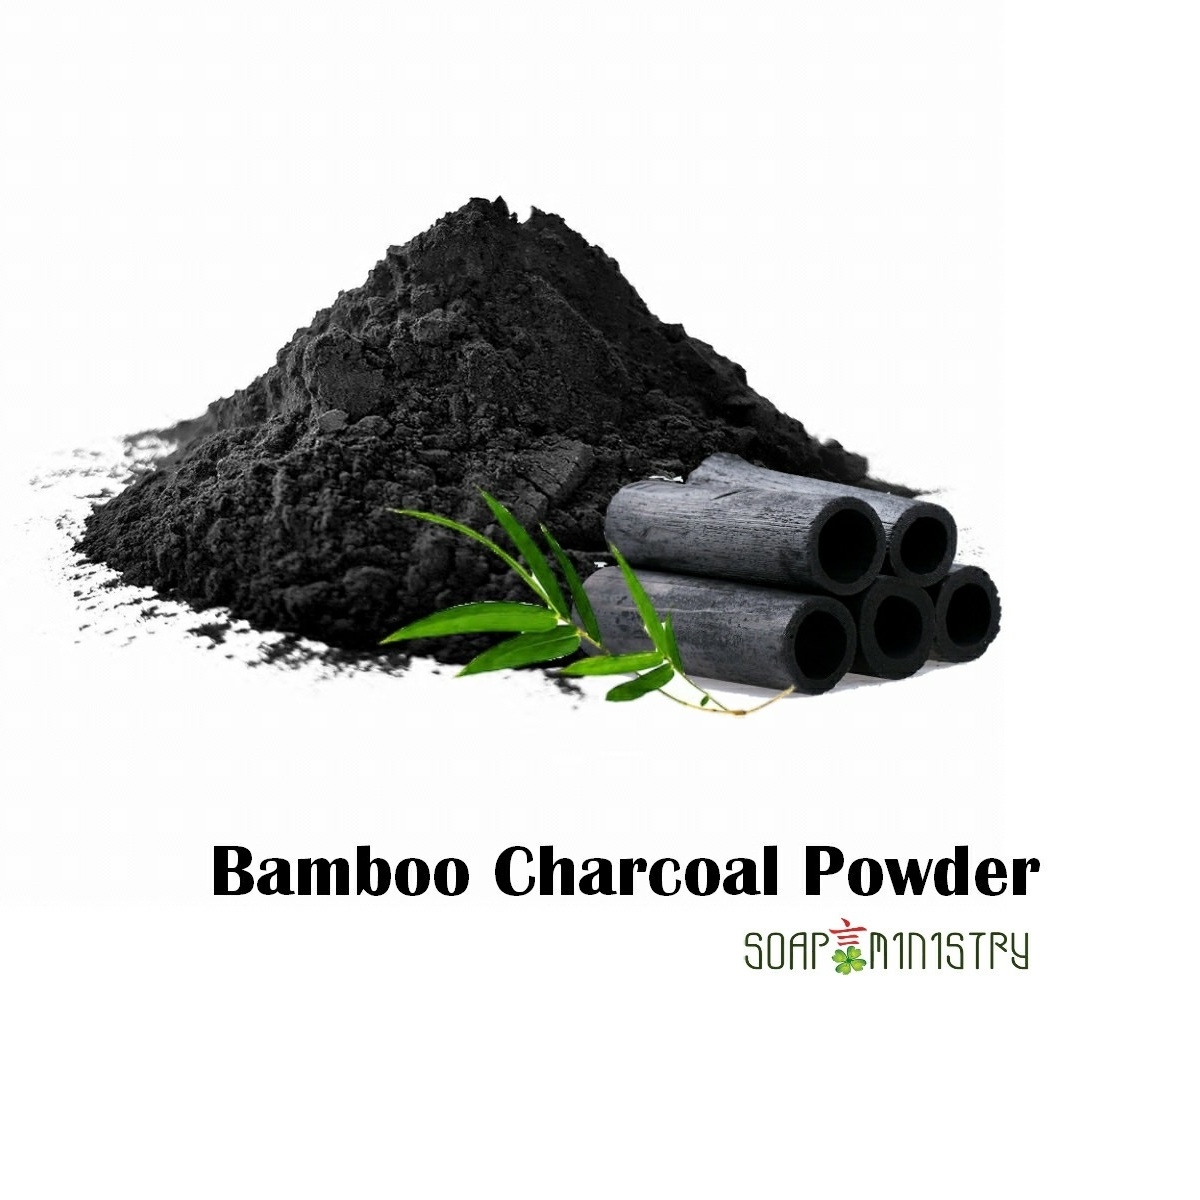 Bamboo Charcoal Powder 500g